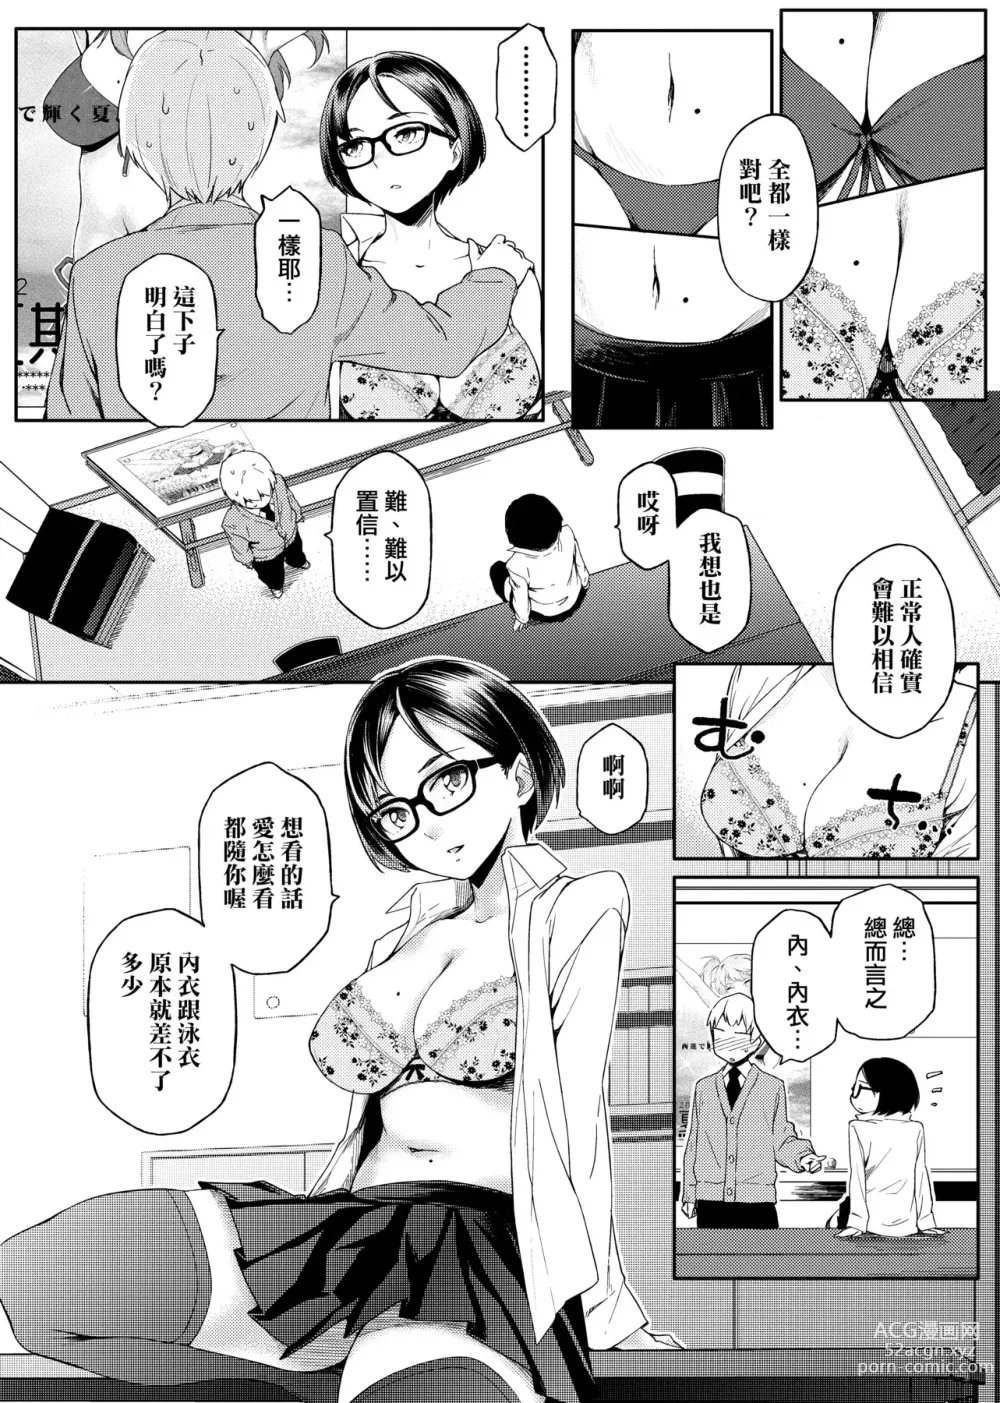 Page 219 of manga Natsu Koi Ota Girl - What Brings You to Japan?